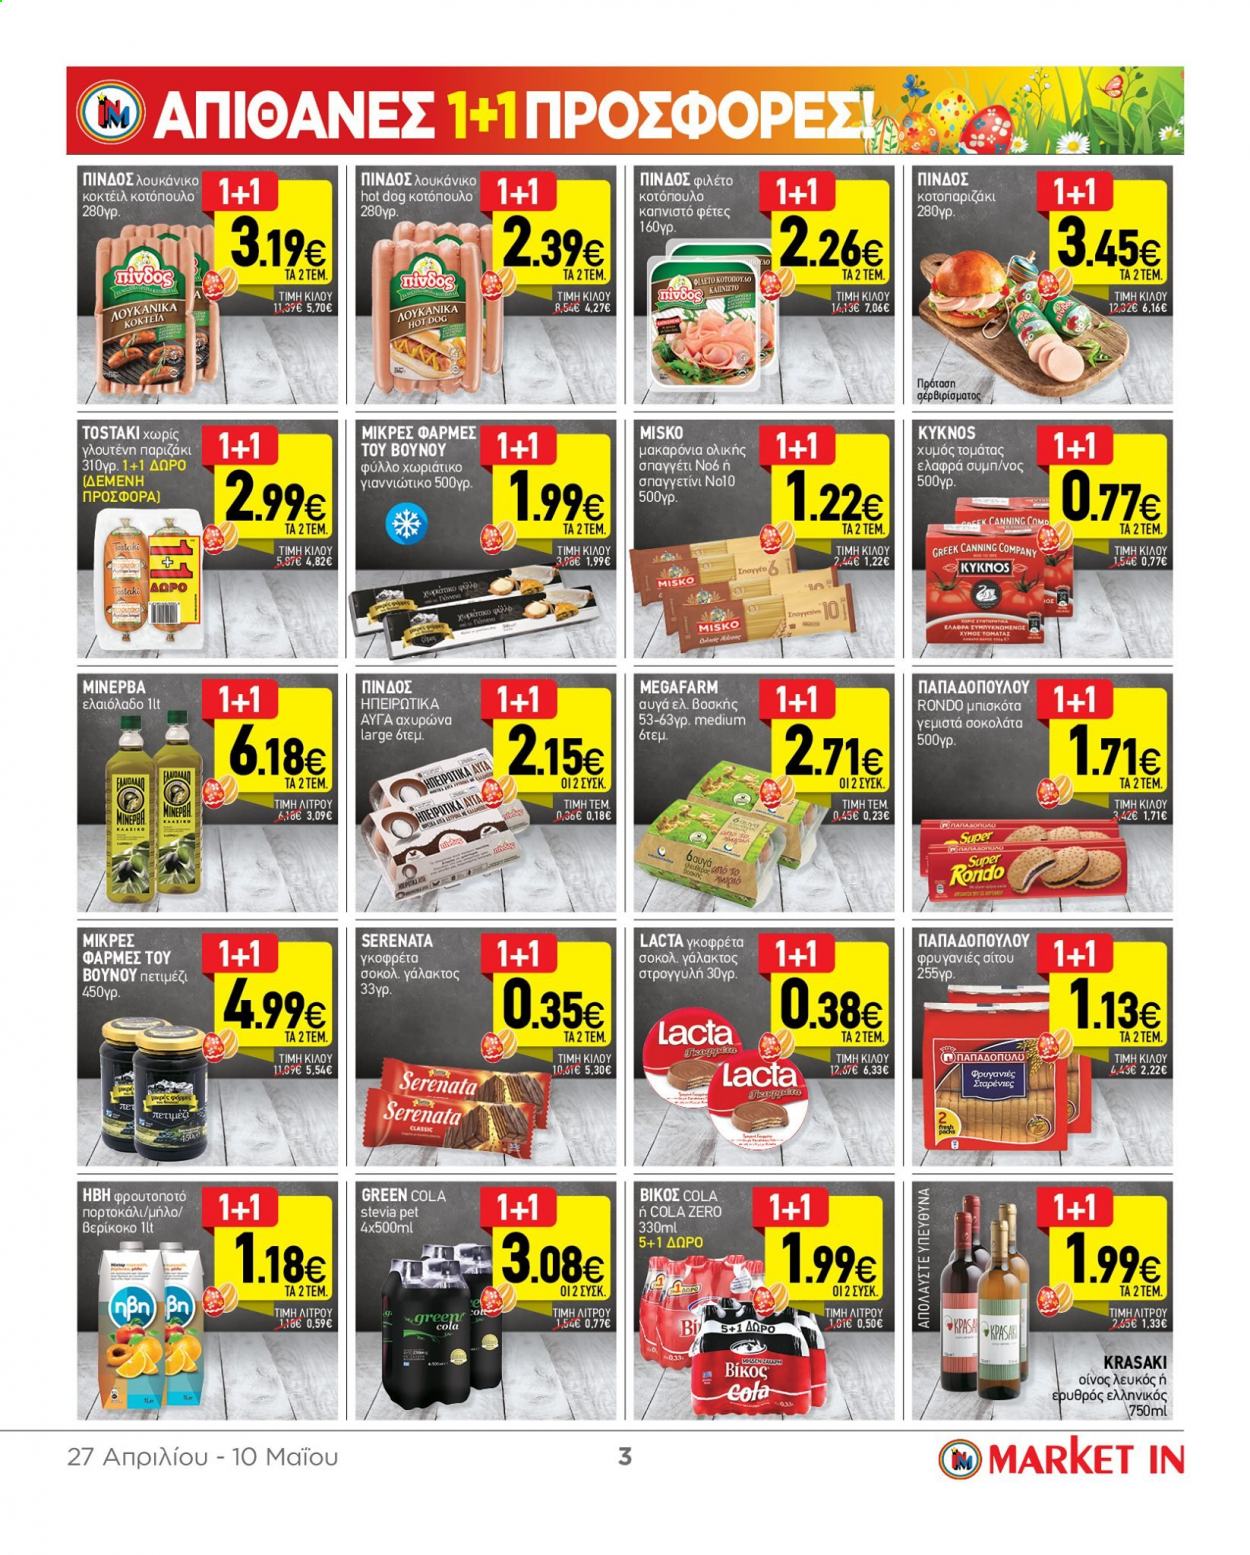 thumbnail - Φυλλάδια Market in - 27.04.2021 - 10.05.2021 - Εκπτωτικά προϊόντα - μπισκότα, κοτόπουλο, λουκάνικο, αυγά, σοκολάτα, μακαρόνια, ελαιόλαδο, green cola. Σελίδα 2.